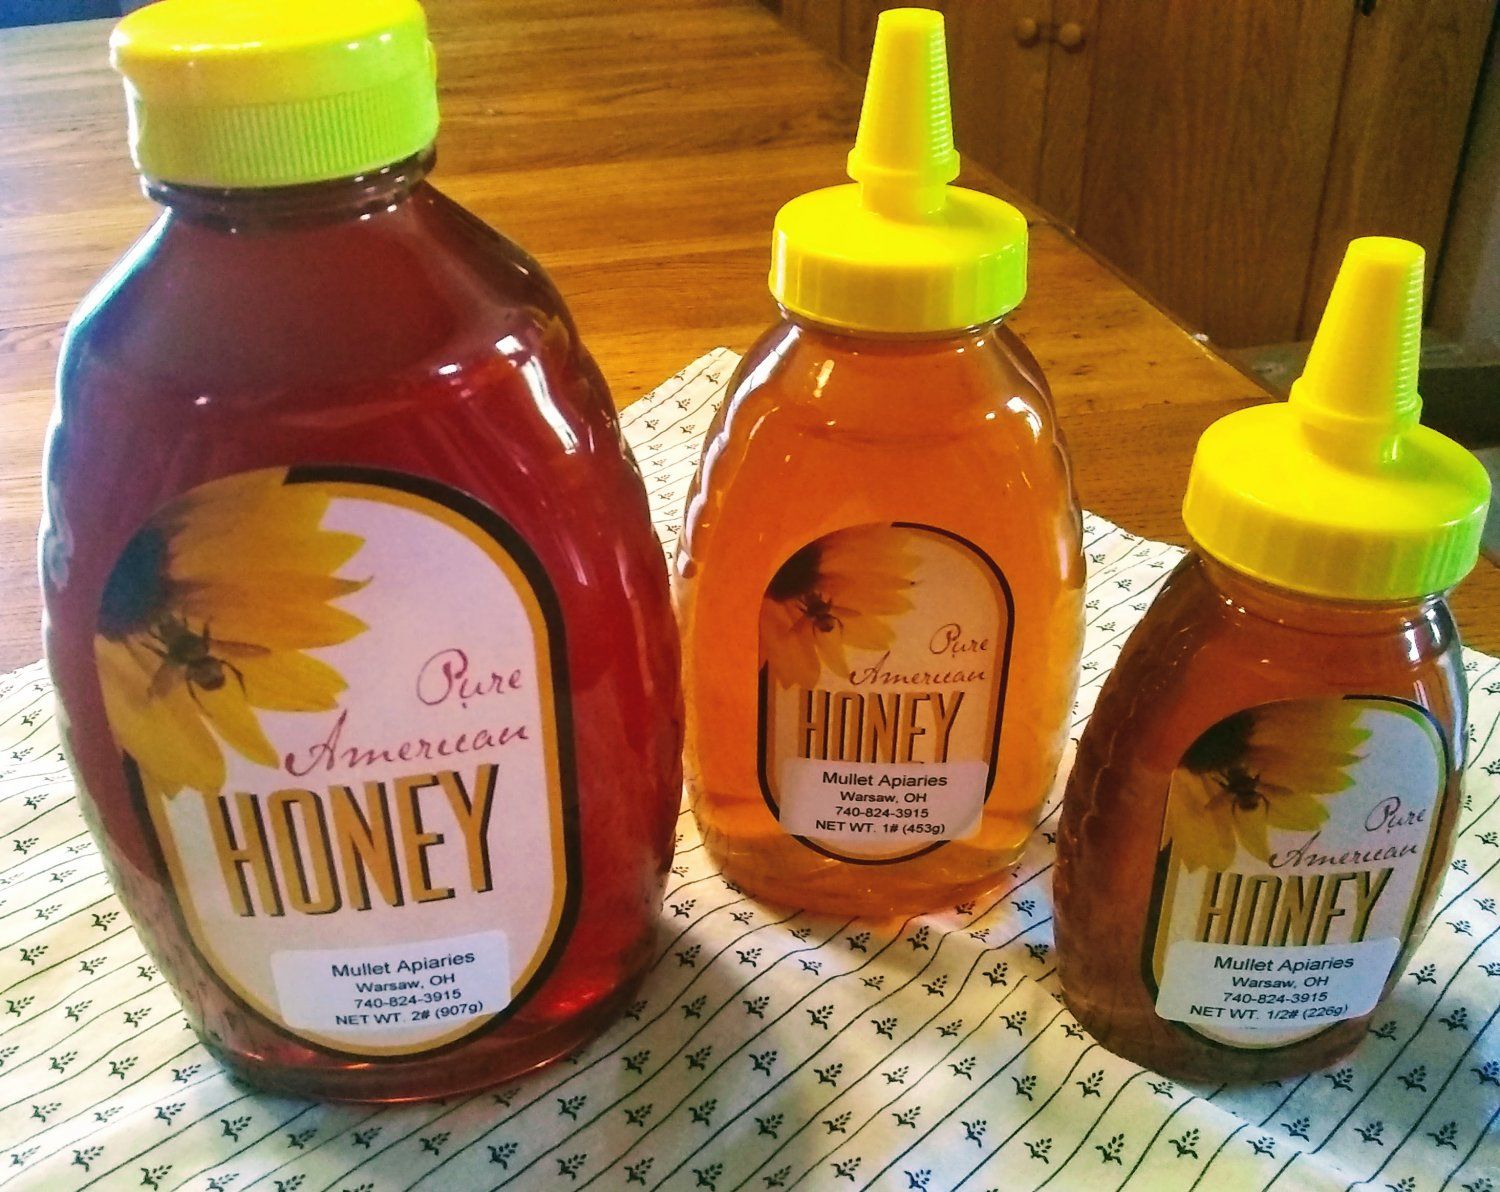 Next Happening: New Product—Local Honey!